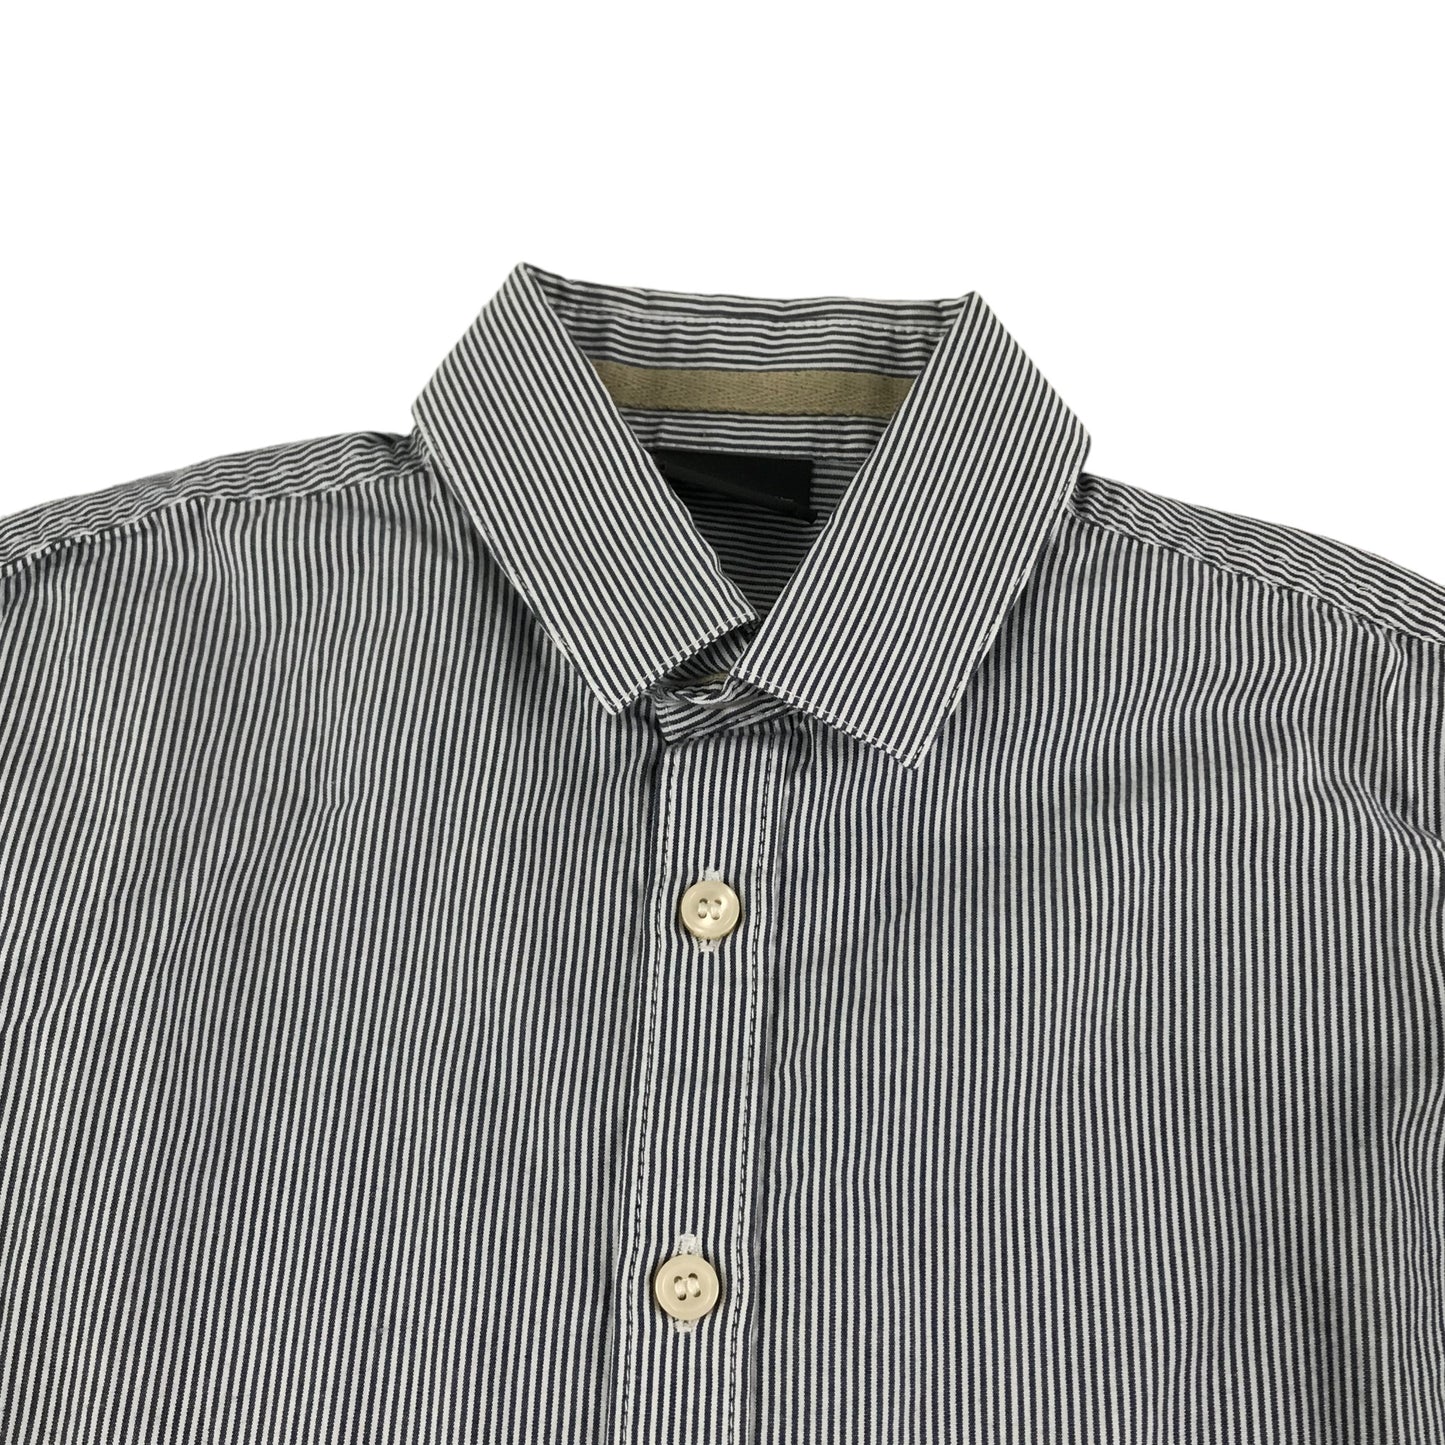 Next Shirt Age 10 Blue White Stripy Long Sleeve Button Up